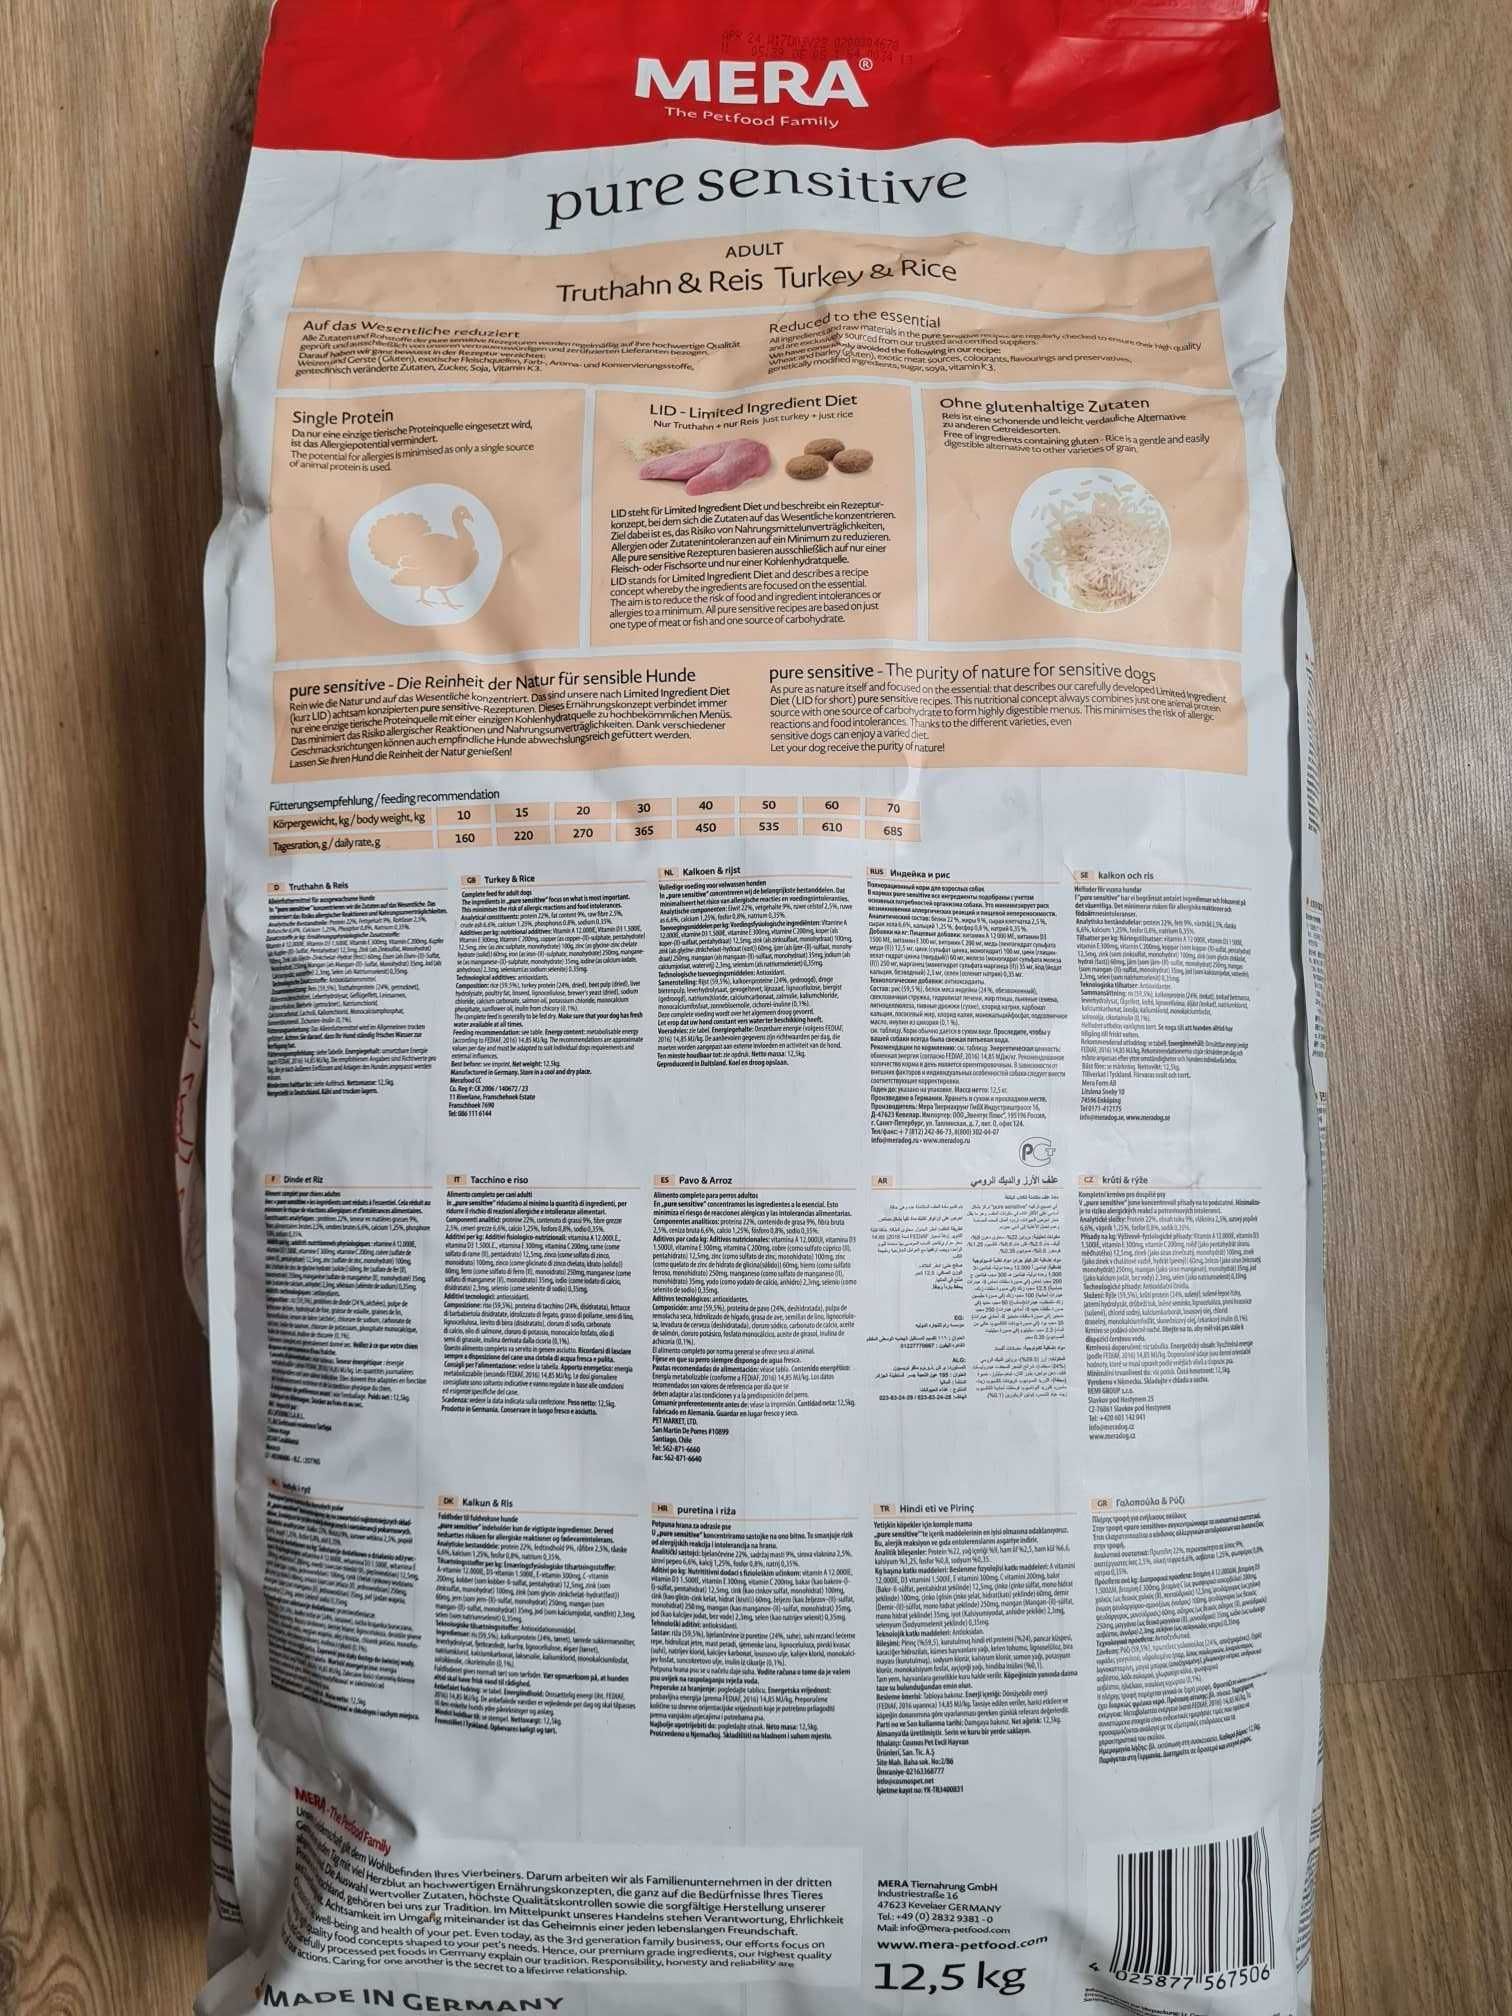 Корм для собак "Mera pure sensitive" (Adult Truthahn&Rice)" 12.5 кг.